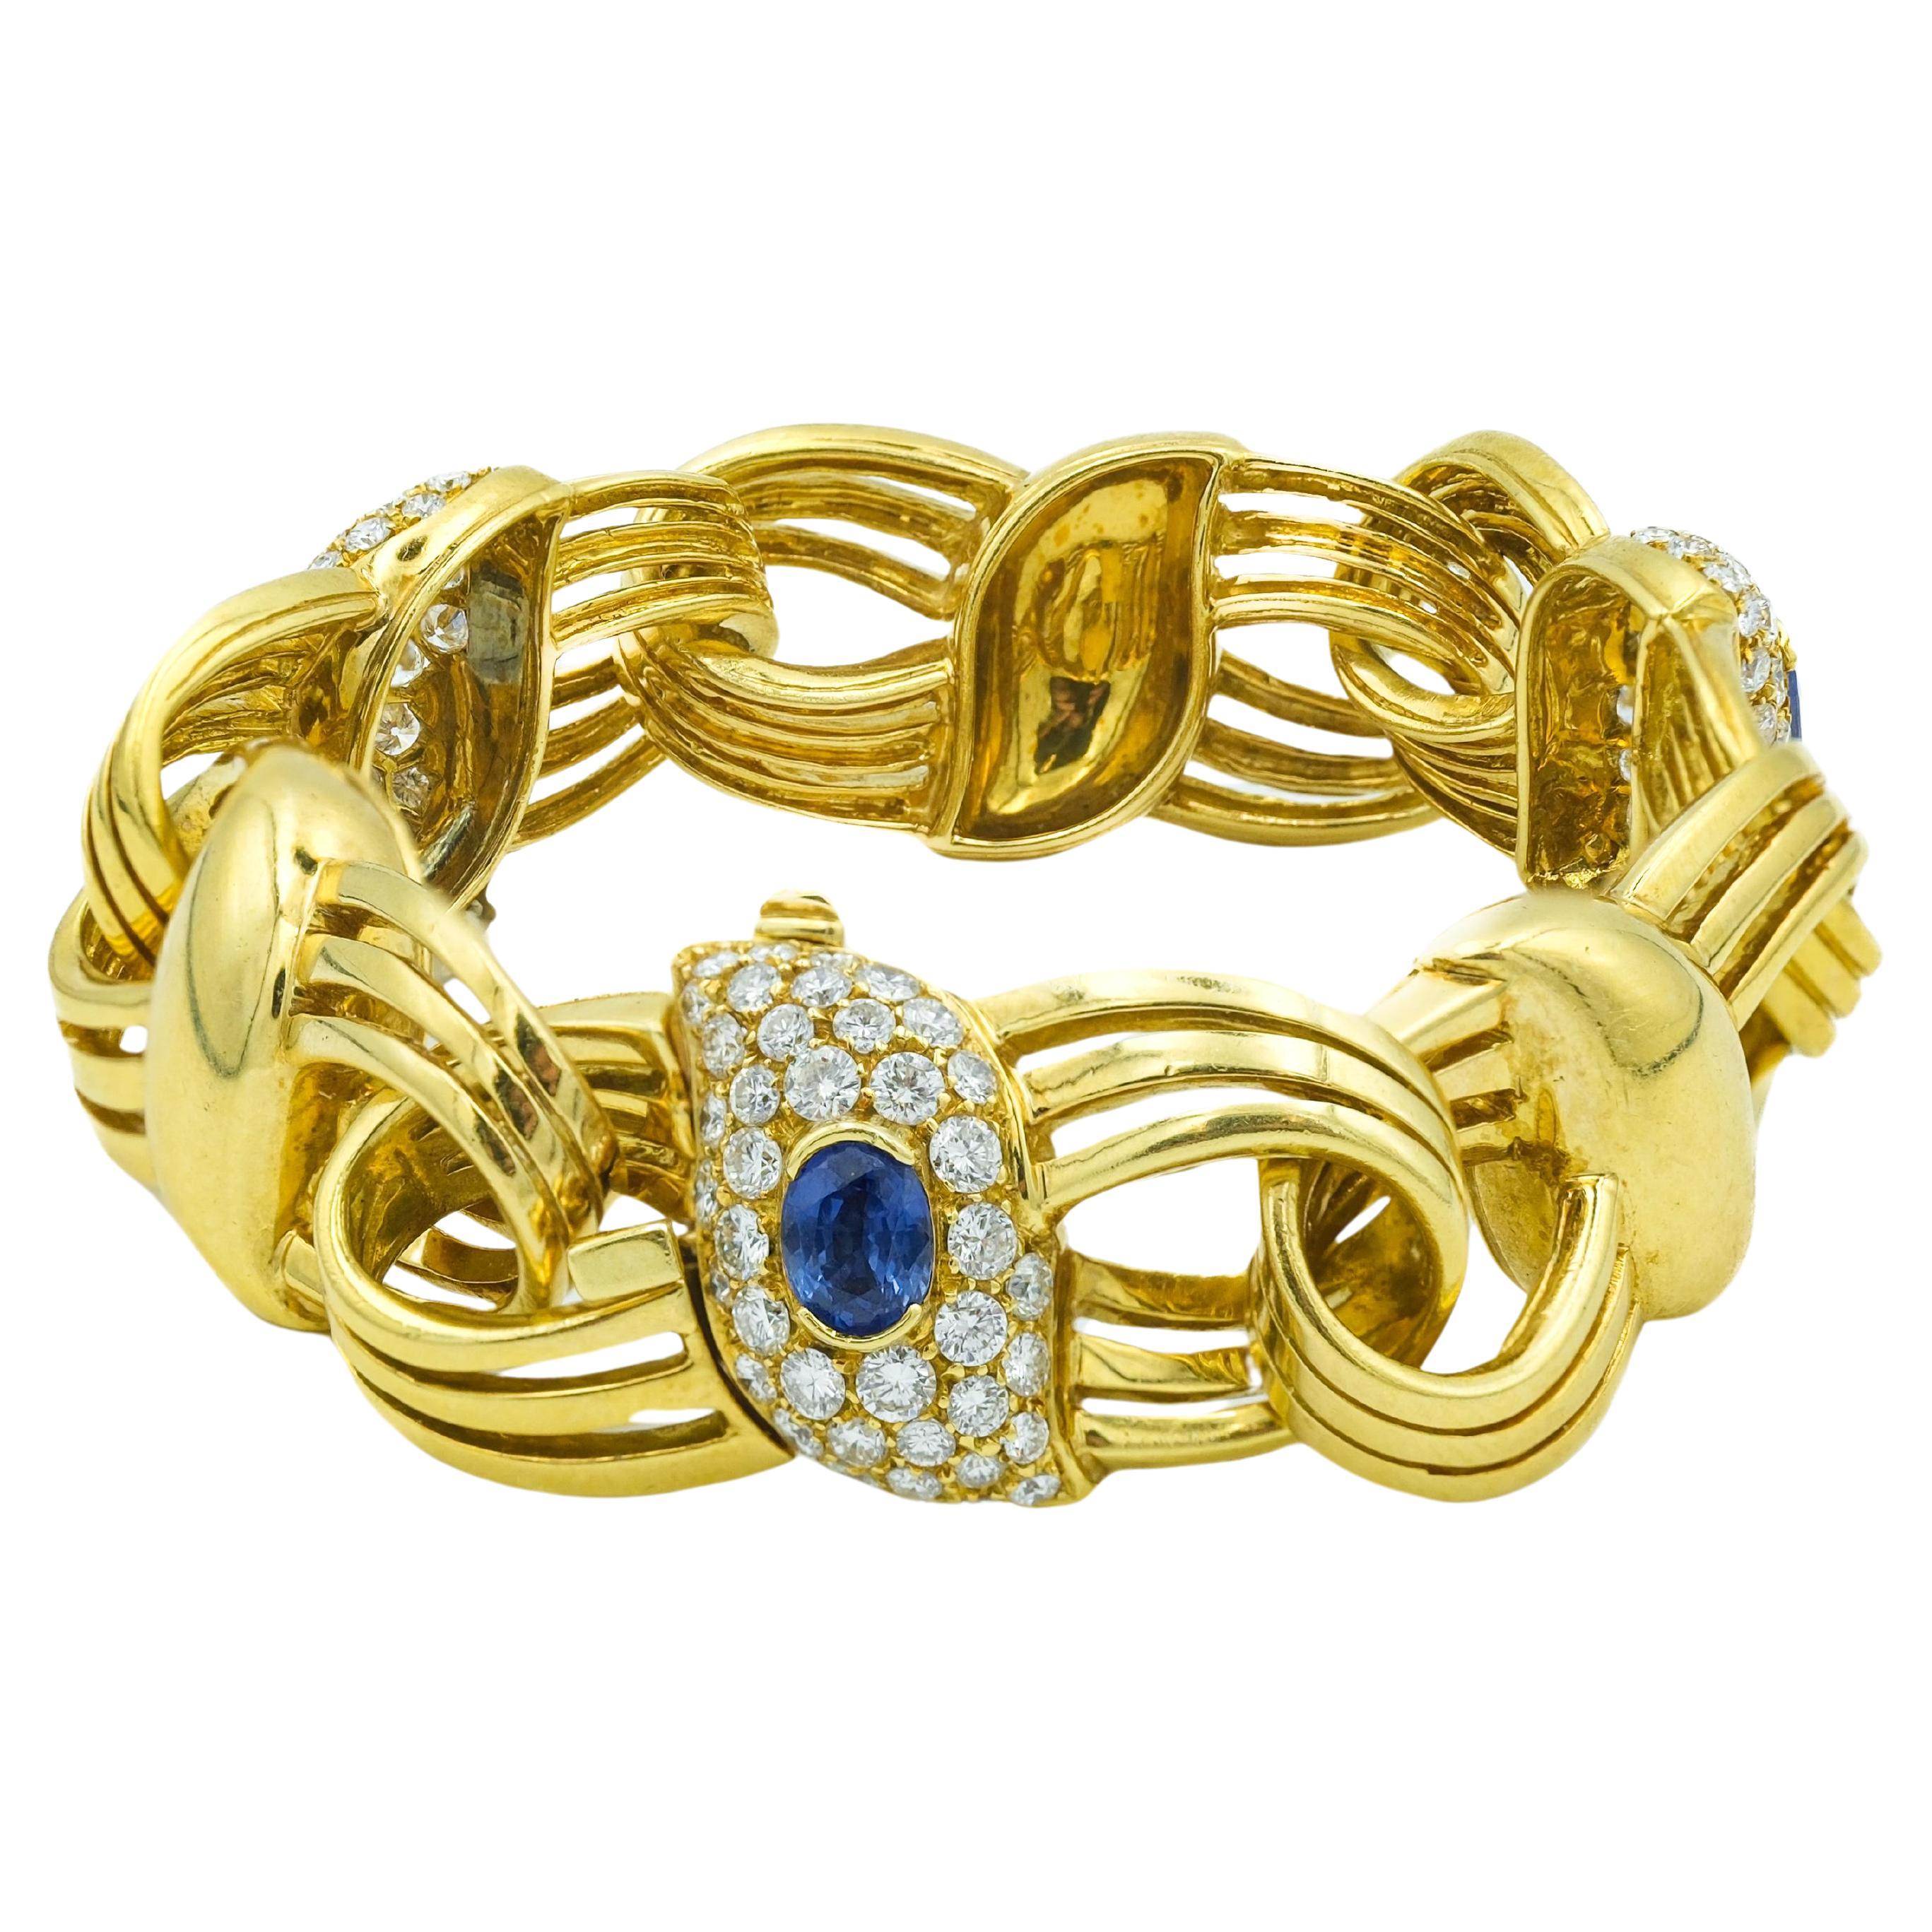 18 Karat Yellow Gold Bracelet with Blue Sapphires and Diamonds